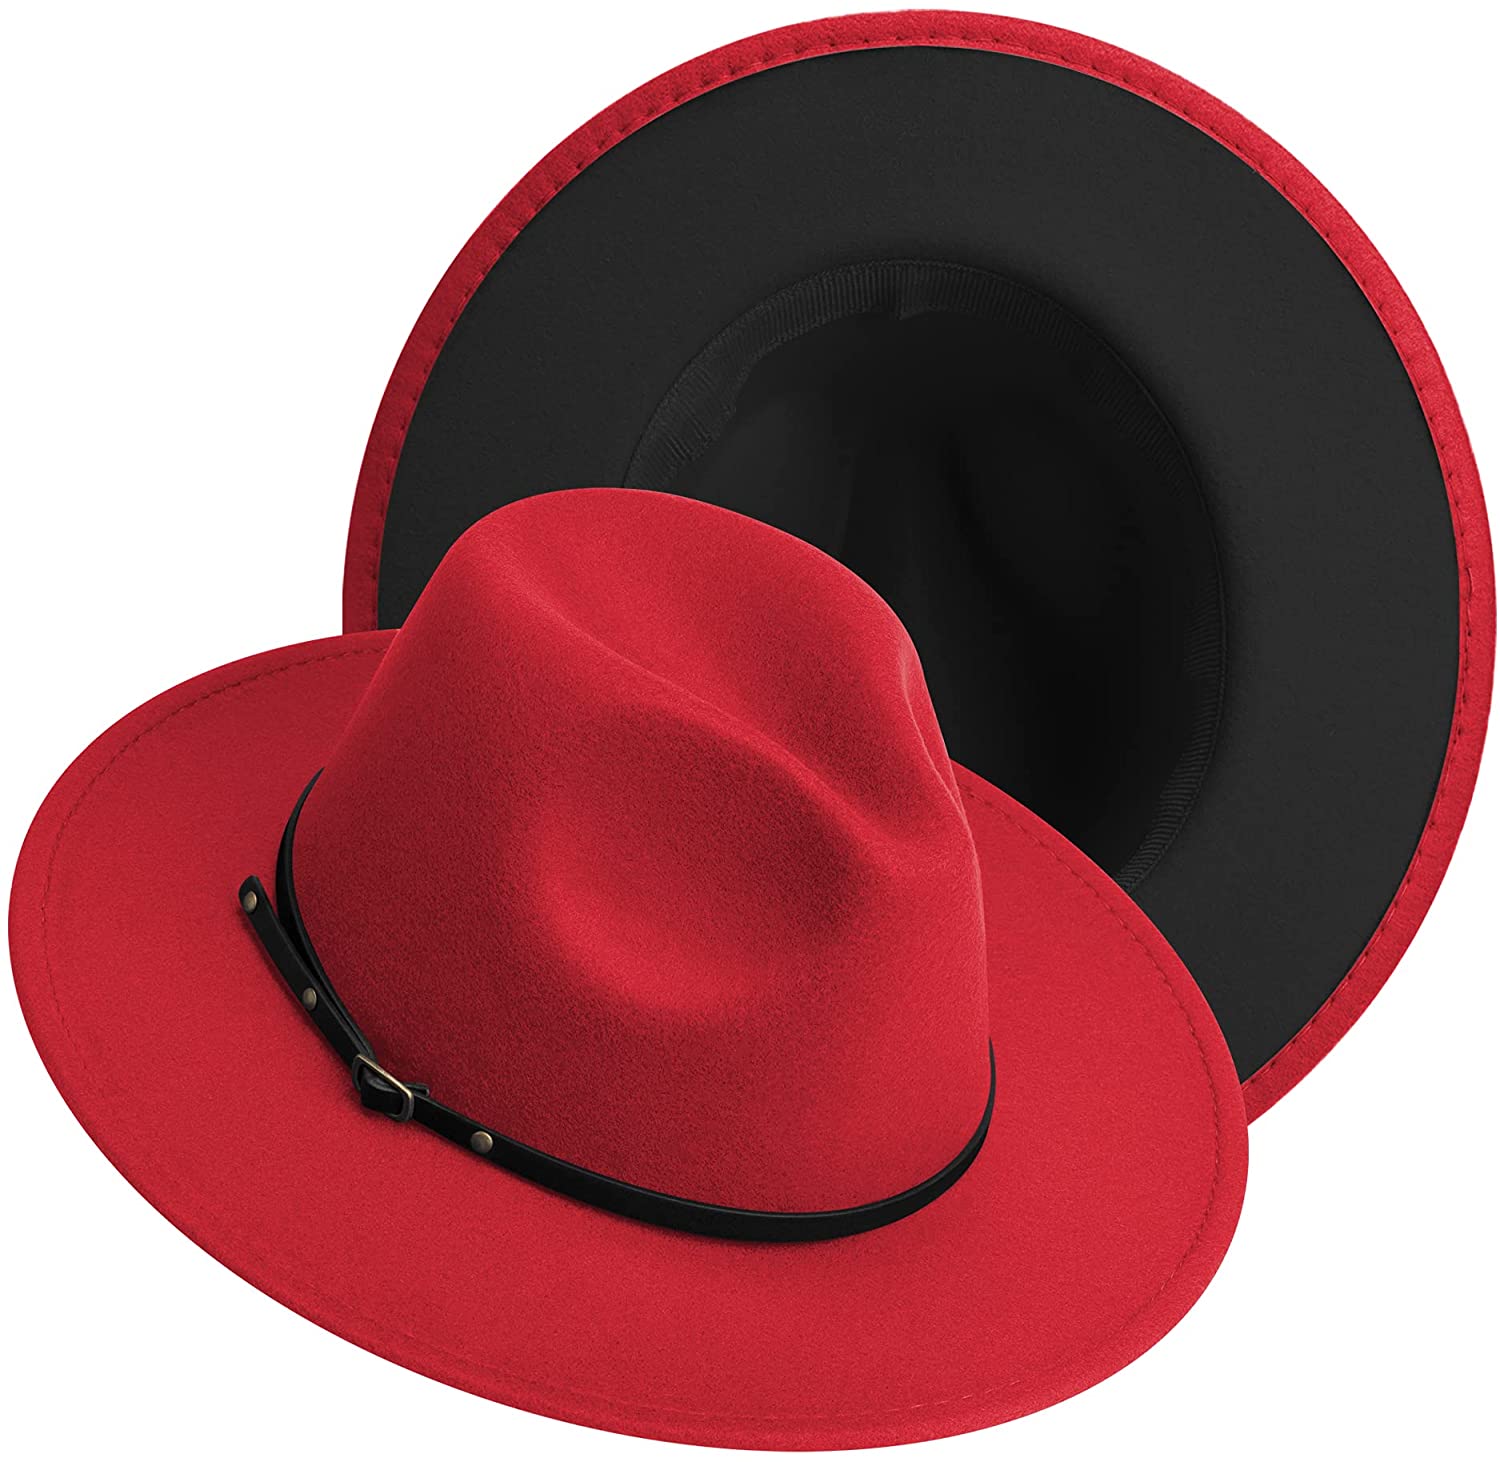 Gossifan Classic Men & Women Wide Brim Fedora Panama Hat with Belt Buckle 